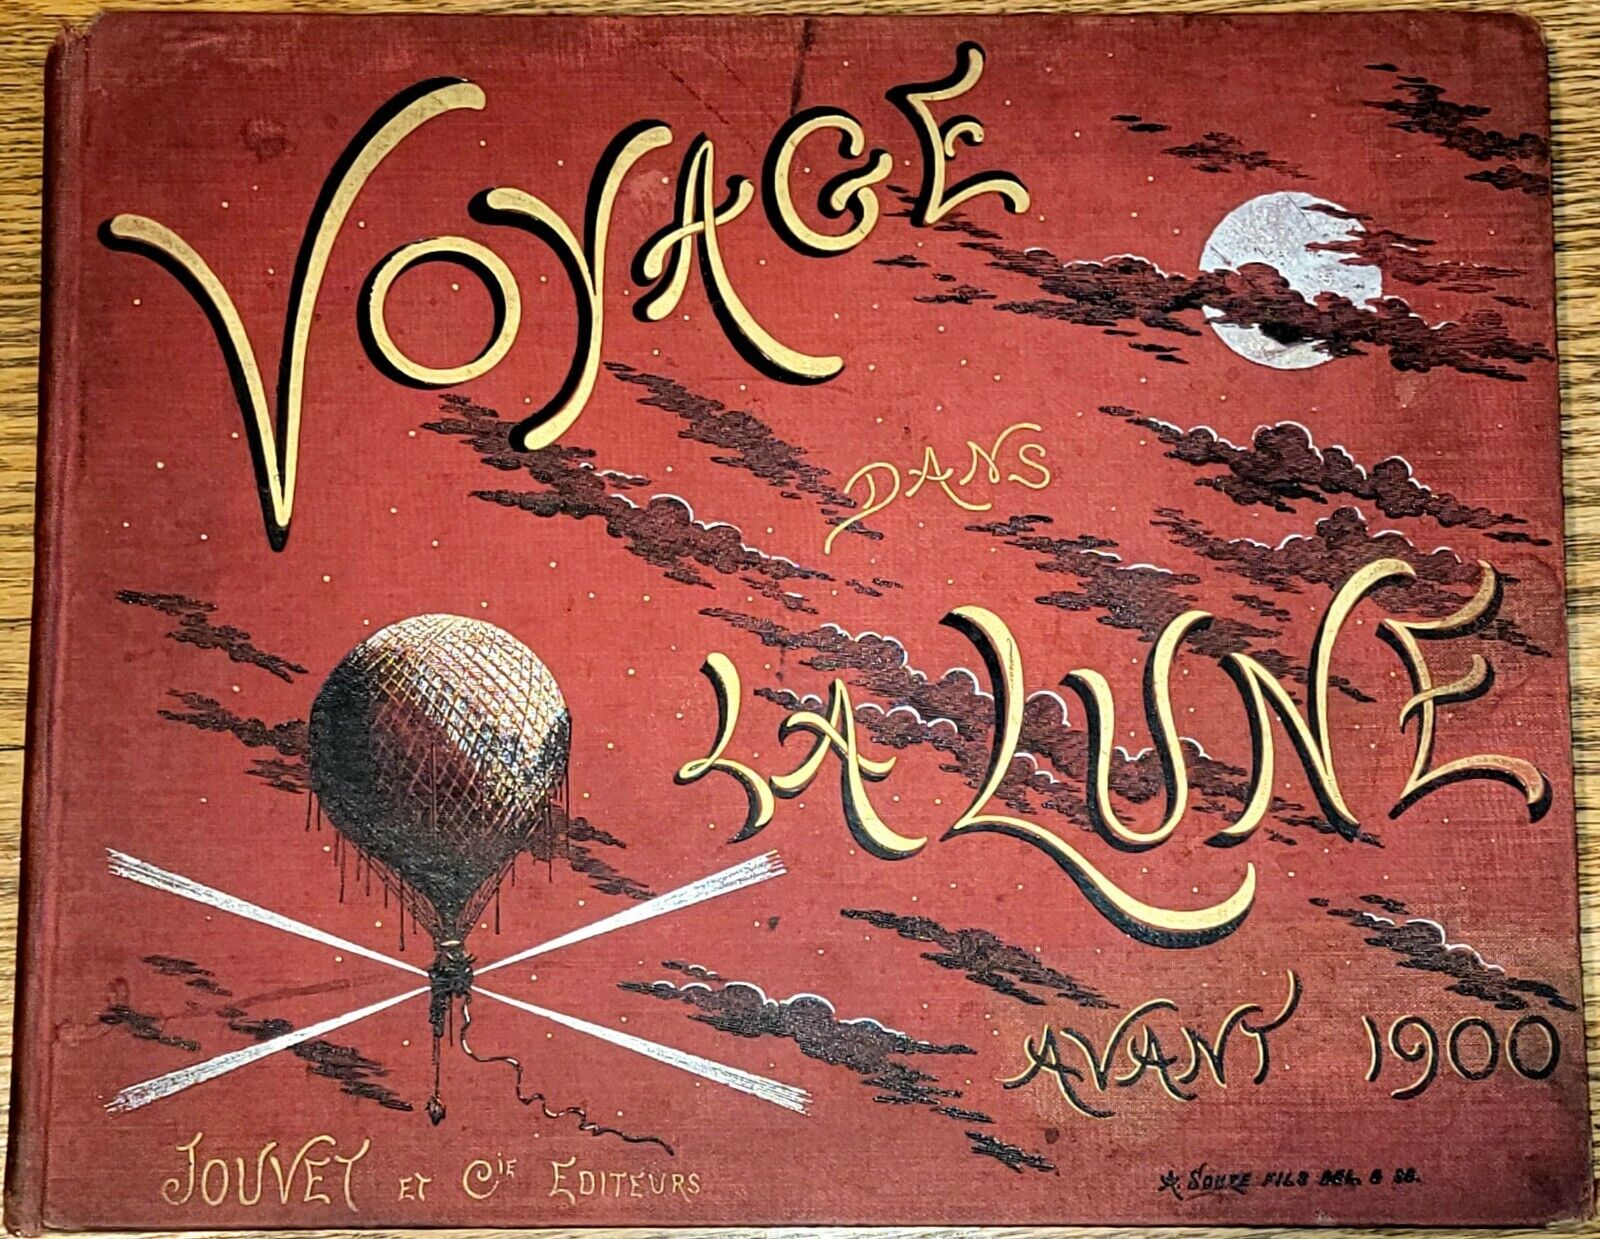 Voyage Dans La Lune Avant 1900 - French Early Science Fiction Book c.1890